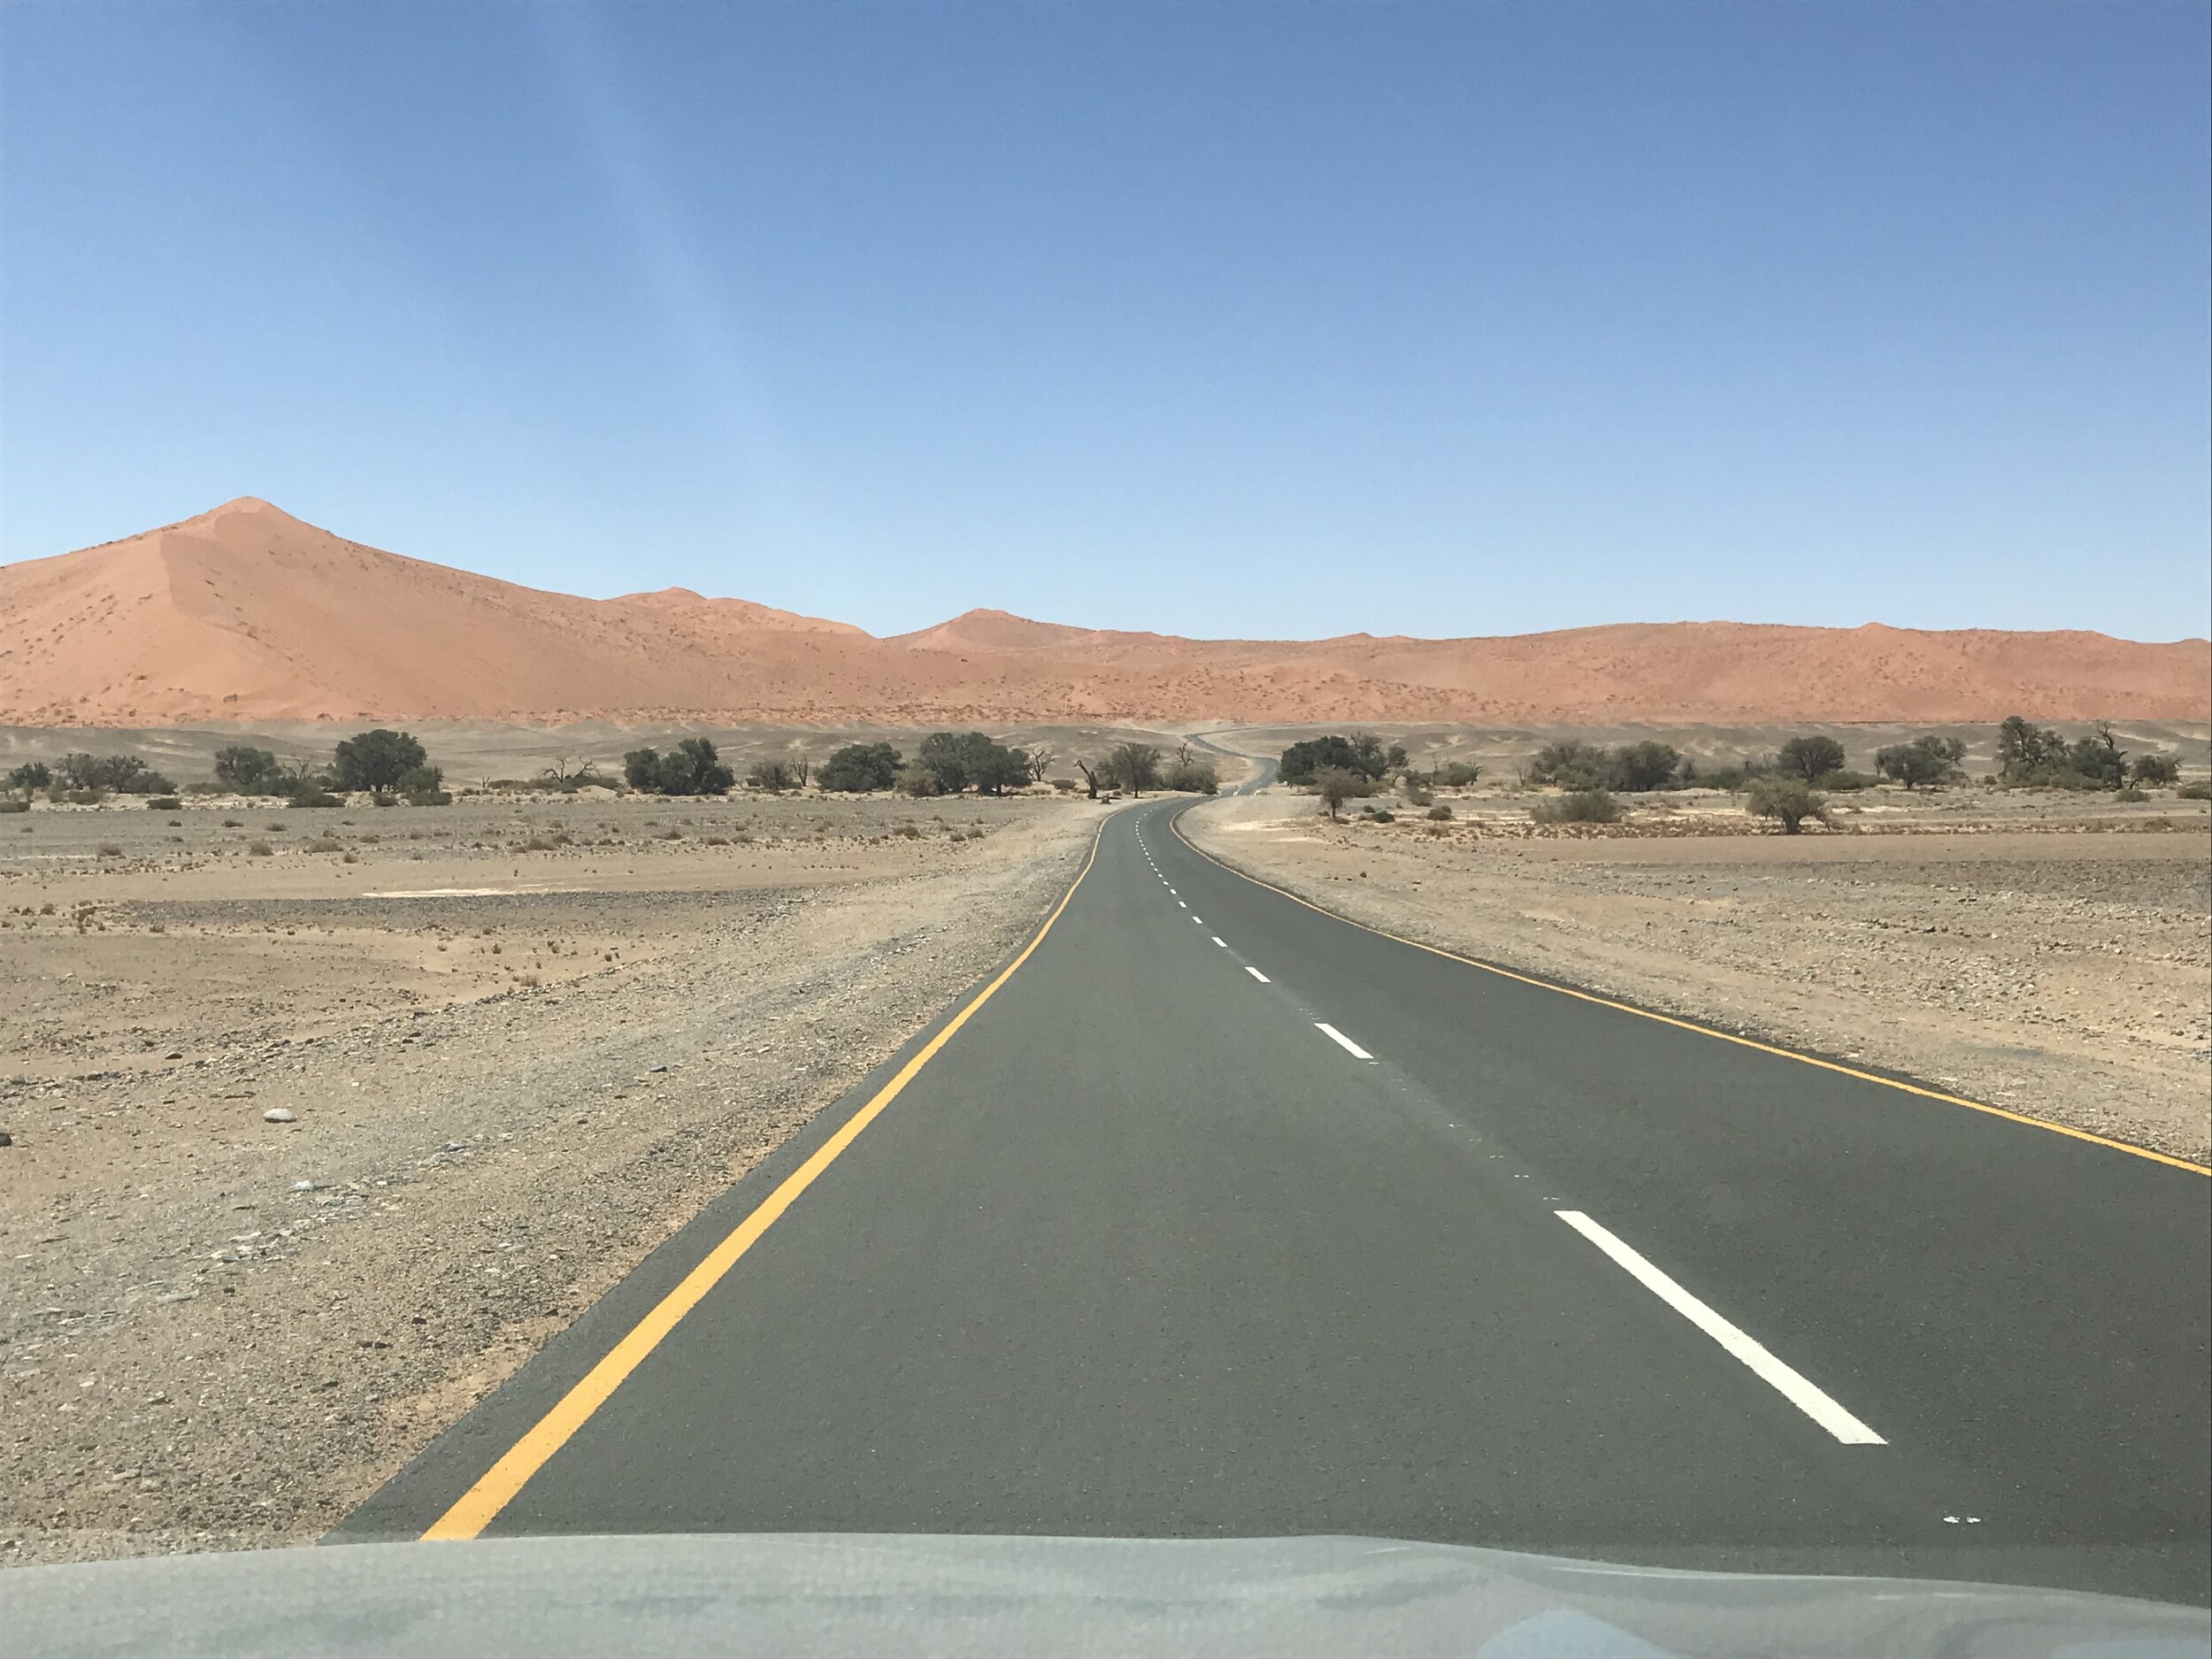 The road through Sossosvlei past the inspiring dunes of the Namib sand sea.